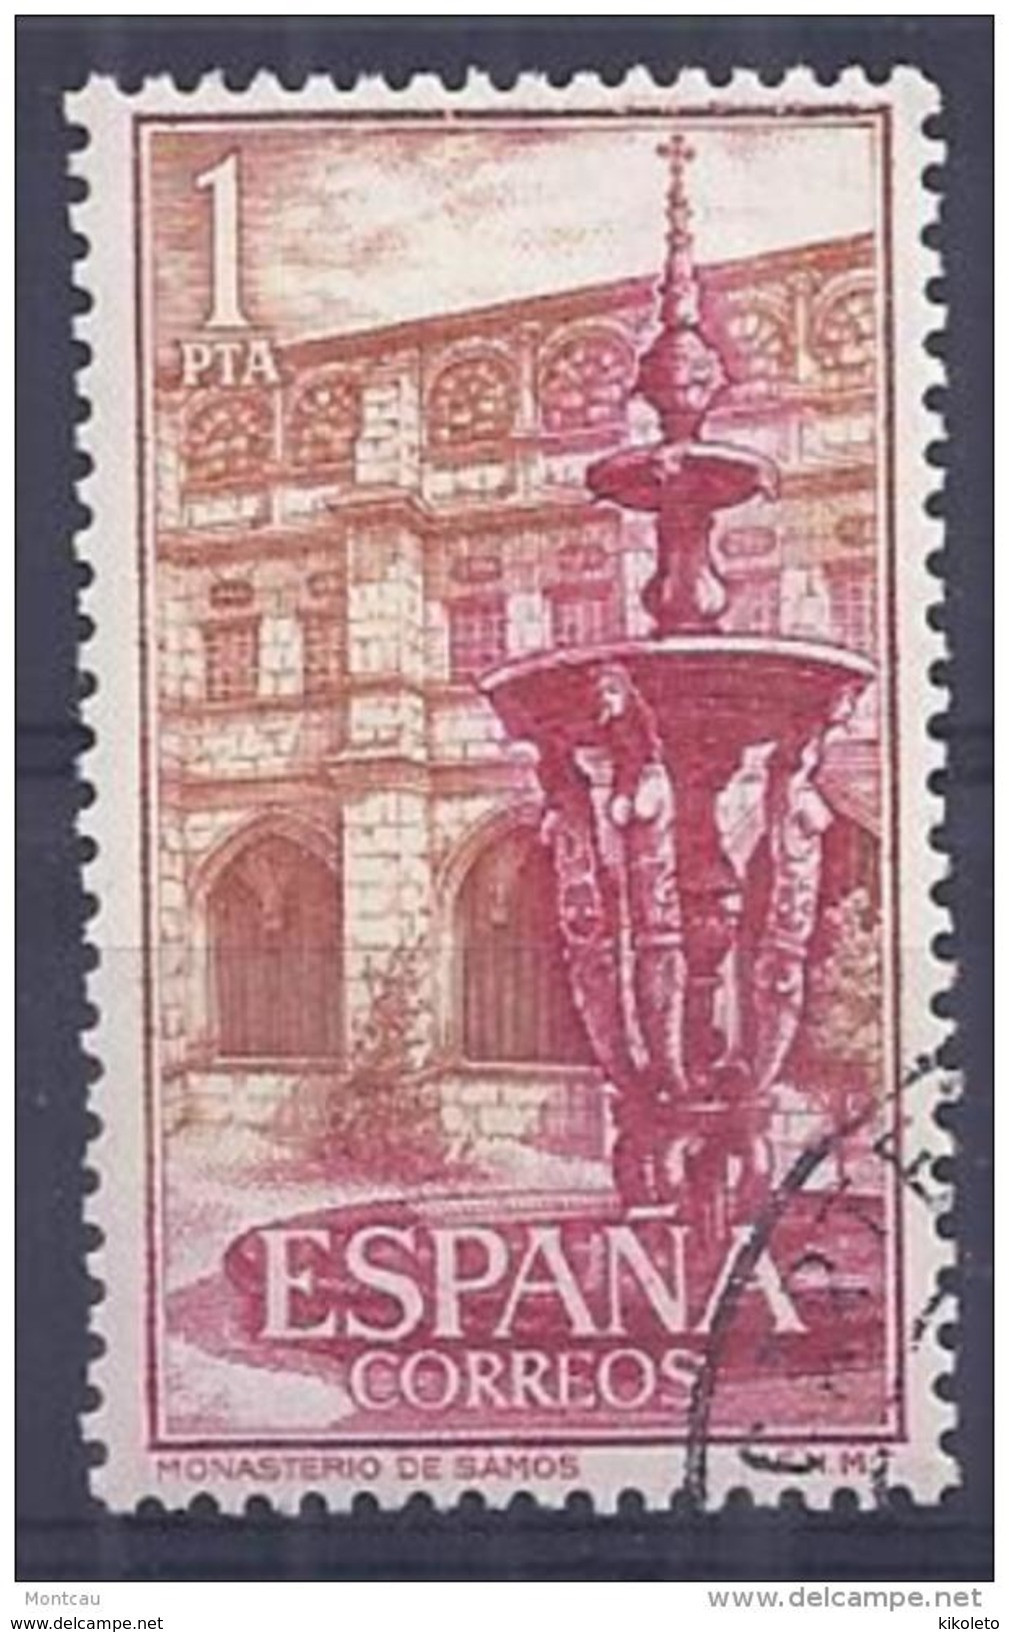 ESPAÑA SPAIN AÑO YEAR 1960 EDIFIL Nº 1323 - USADO (o) USED (o) - REAL MONASTERIO DE SAMOS - 1 Pta - Gebruikt